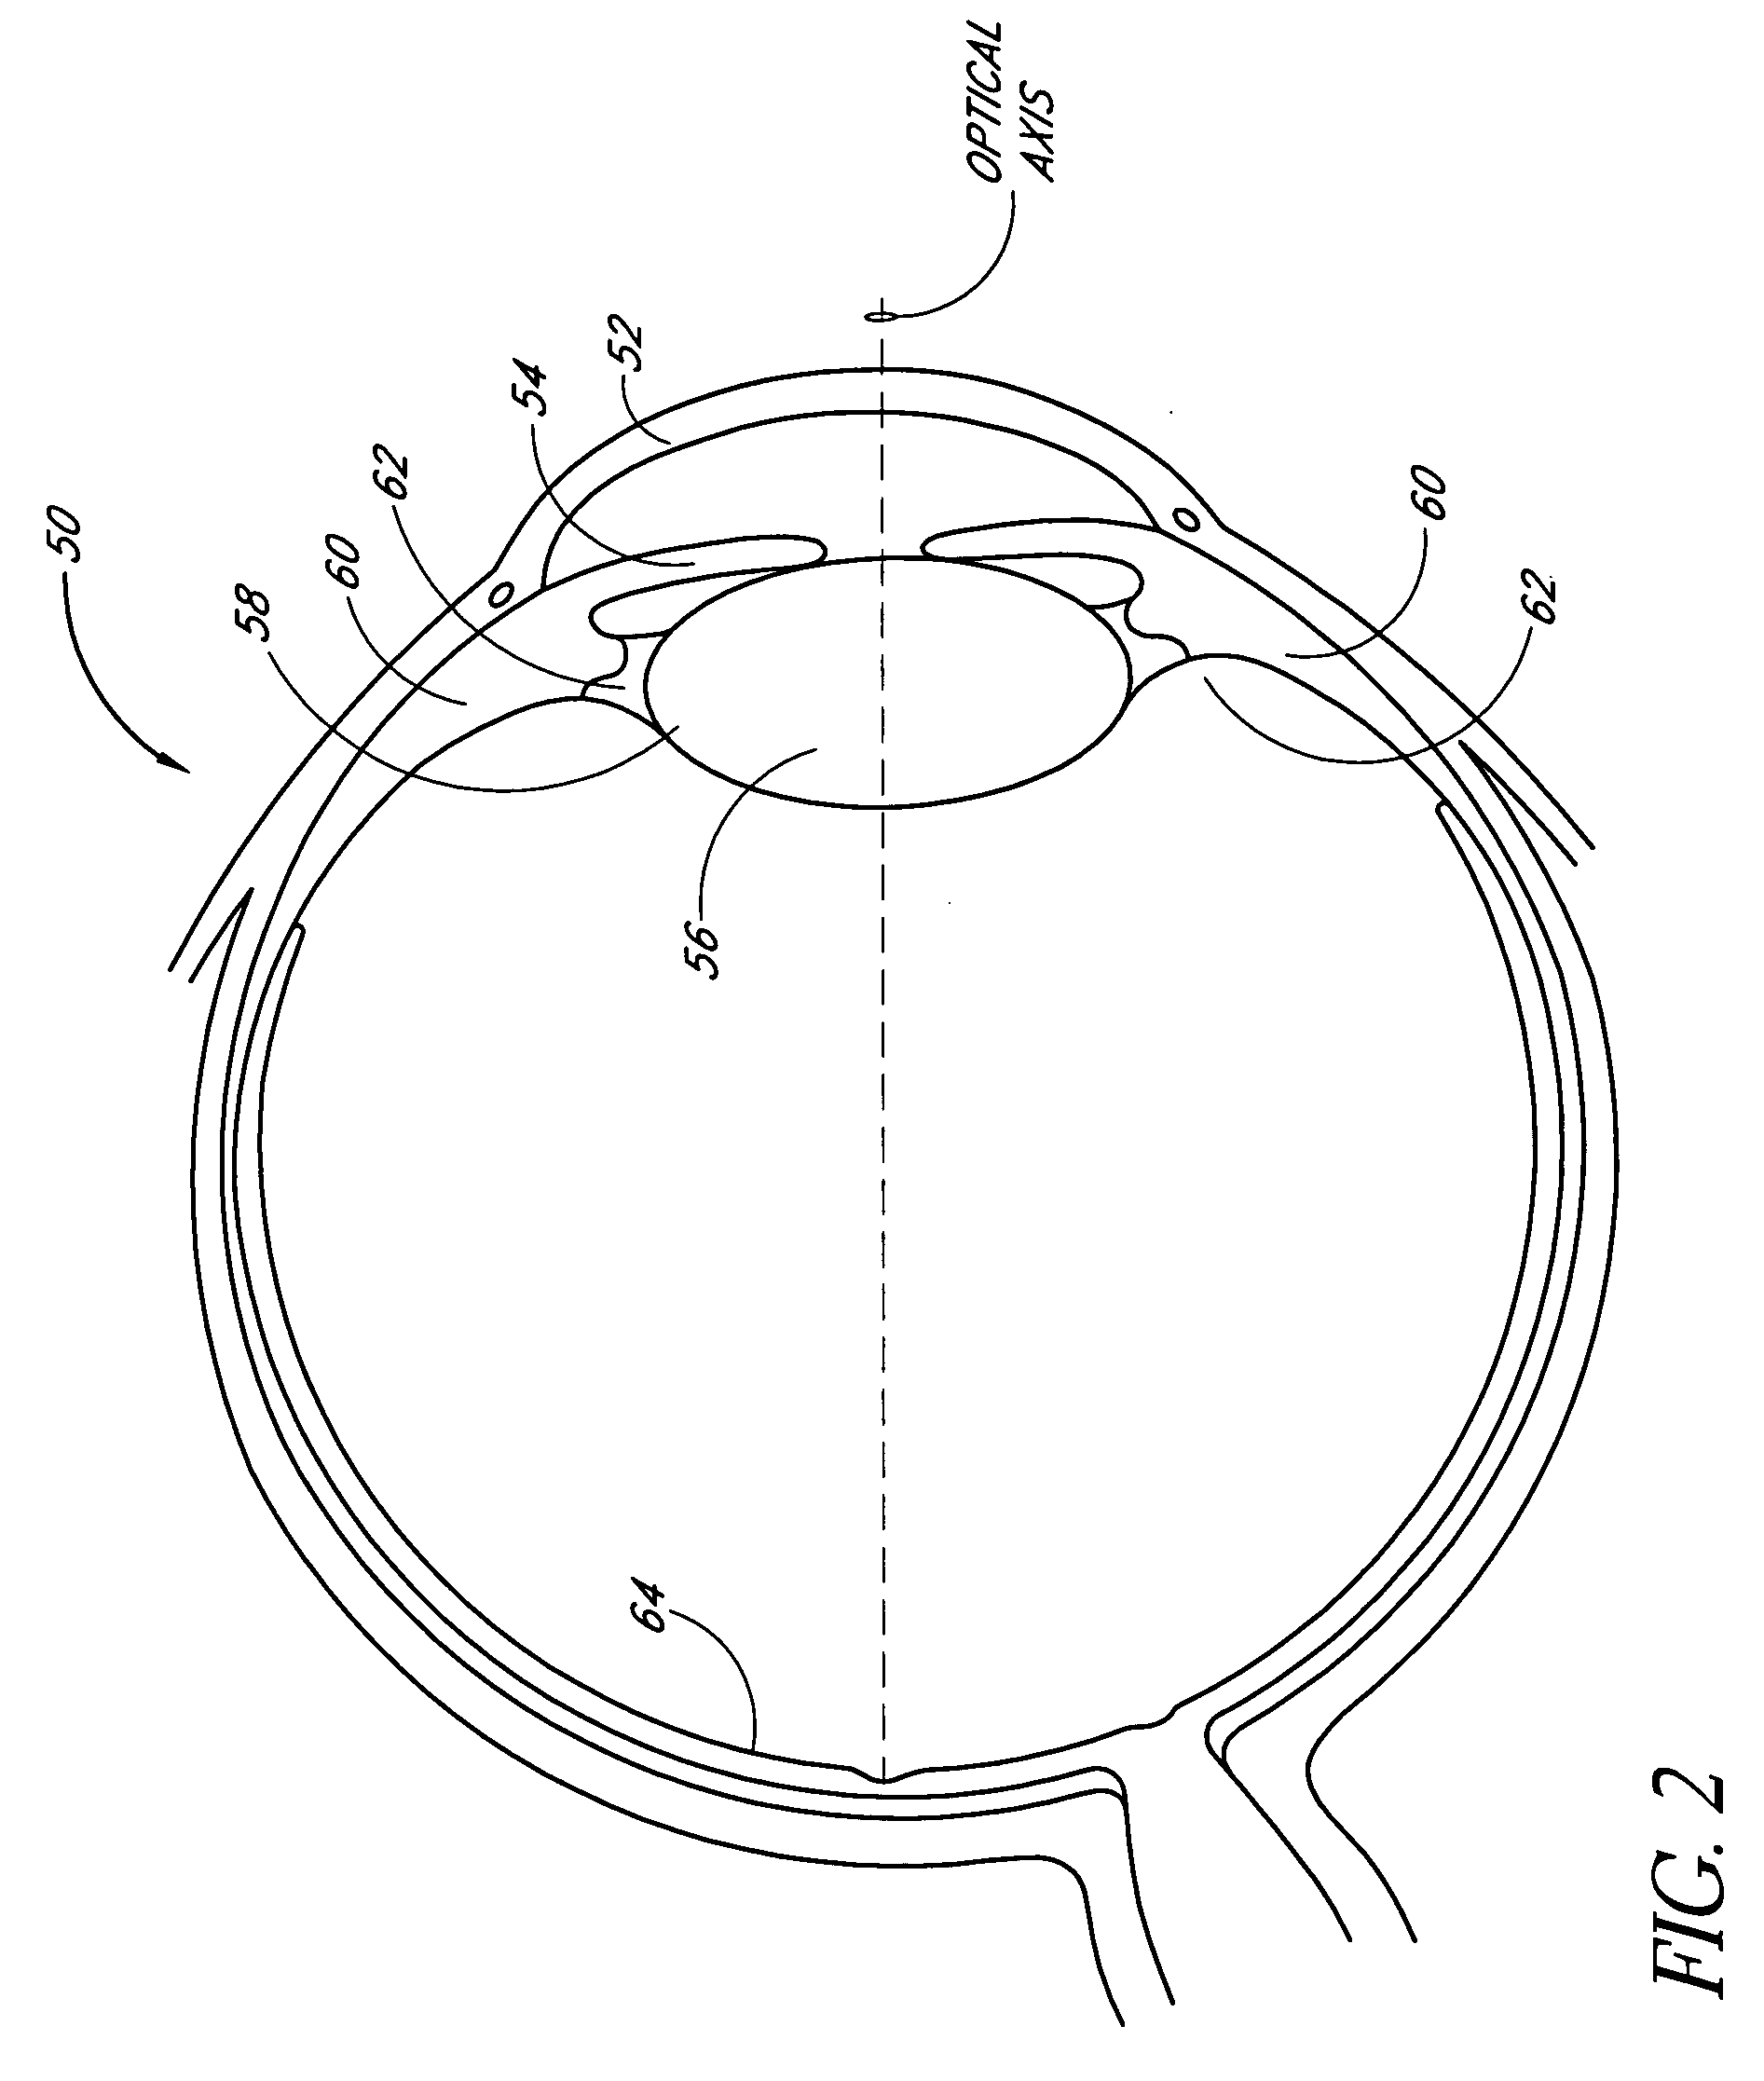 Method of preparing an intraocular lens for implantation